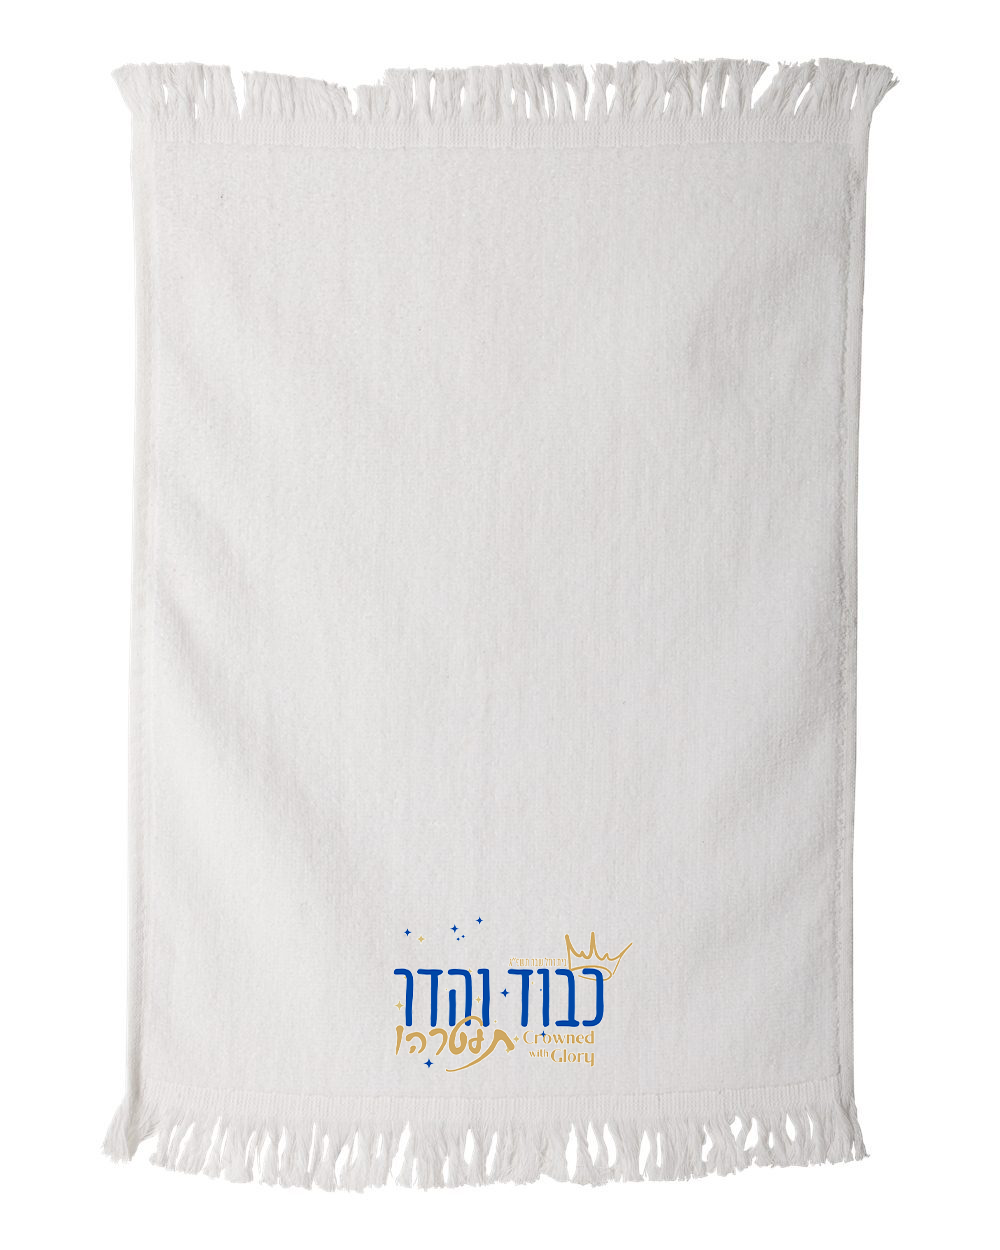 Carmel Towel Company Fringed Towel - C1118